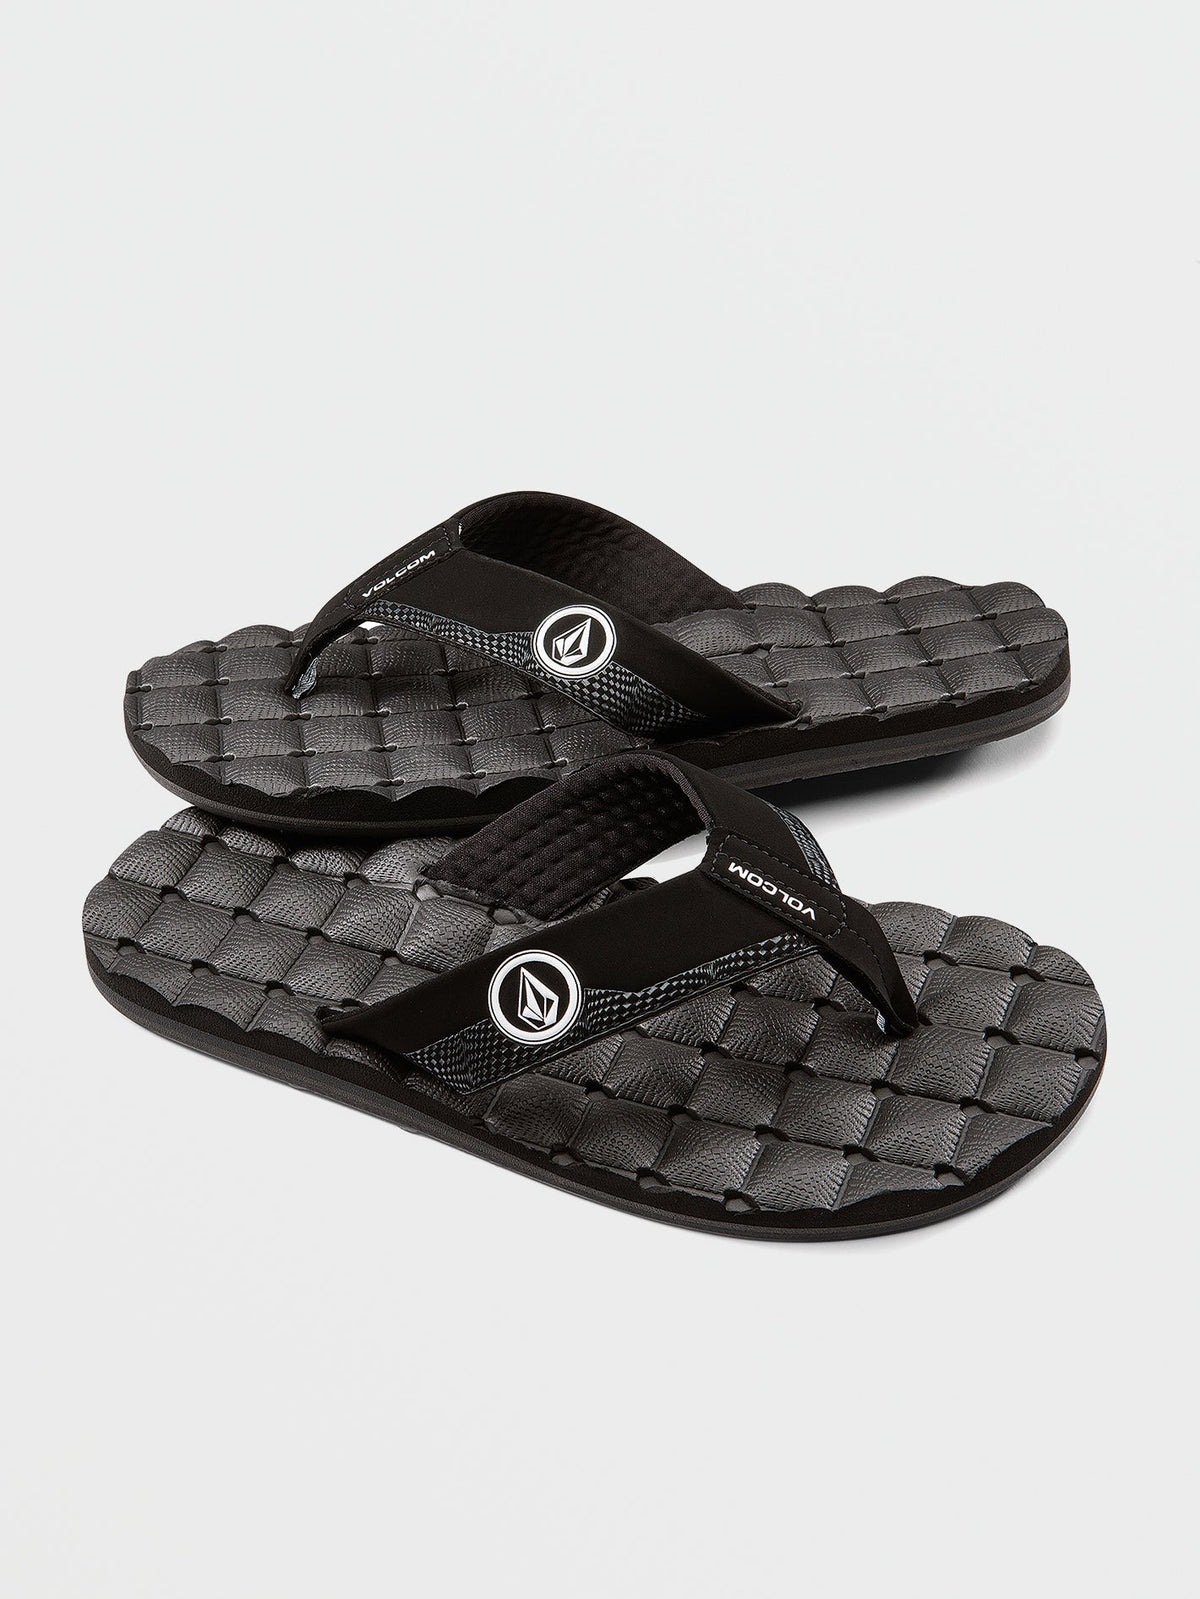 Volcom Recliner Boys Sandals (Age 2-7) Black White